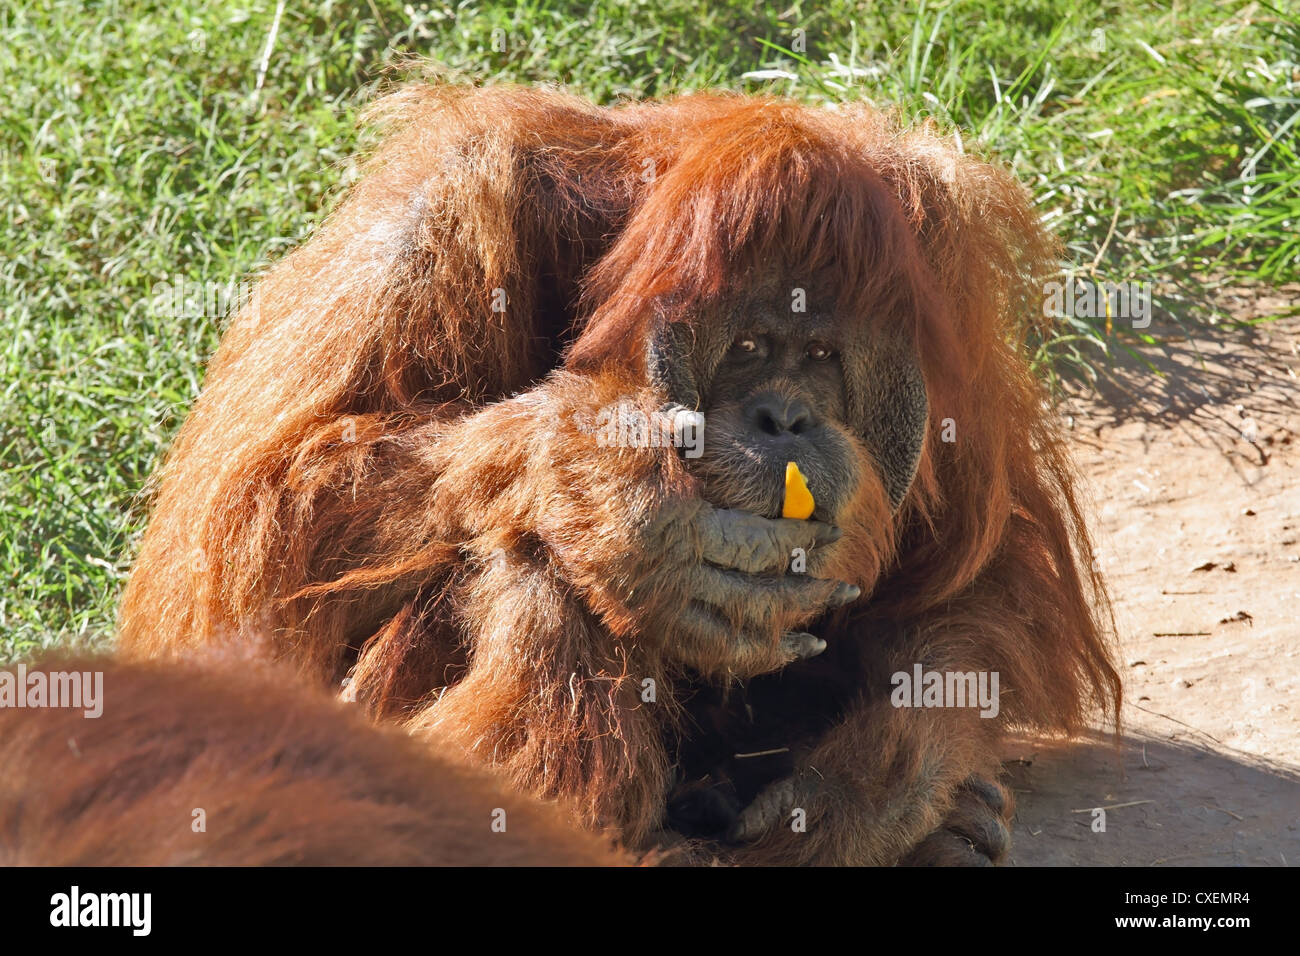 Hairy orangutan hi-res stock photography and images - Alamy